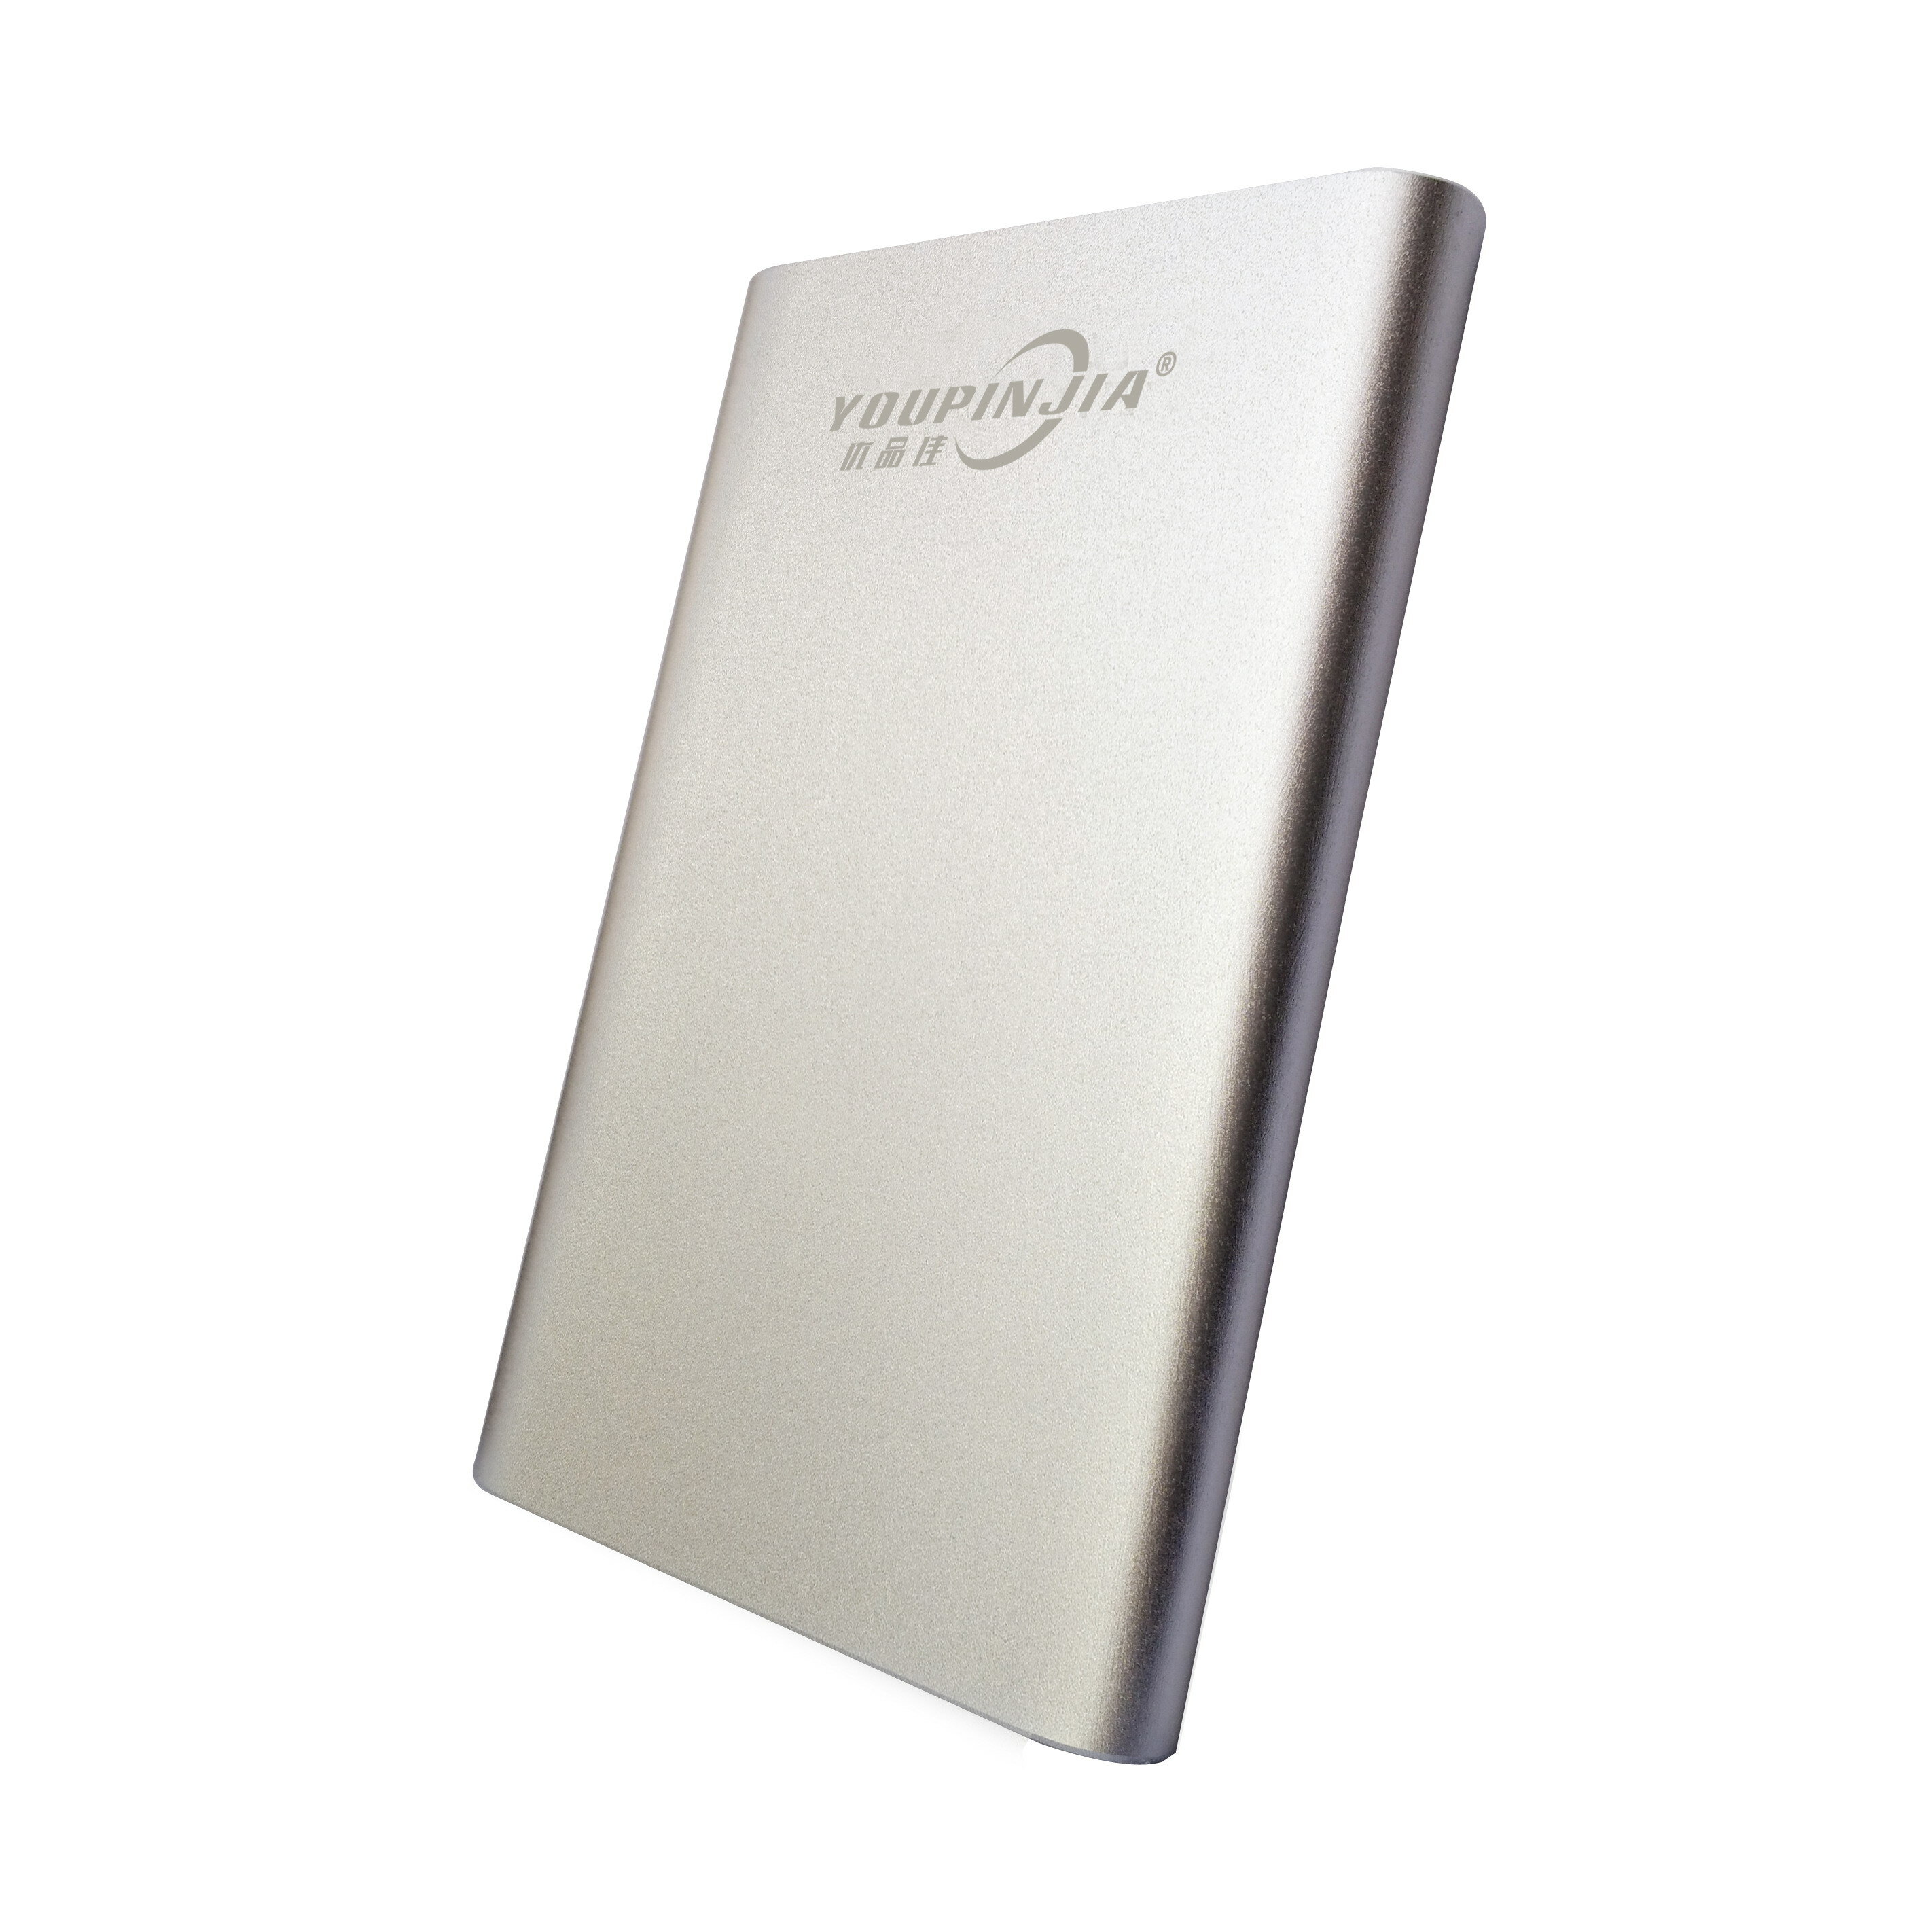 Youpinjia Mobile Hard Disk External Hard Drive 250G 320G 500G Portable Hard Disk